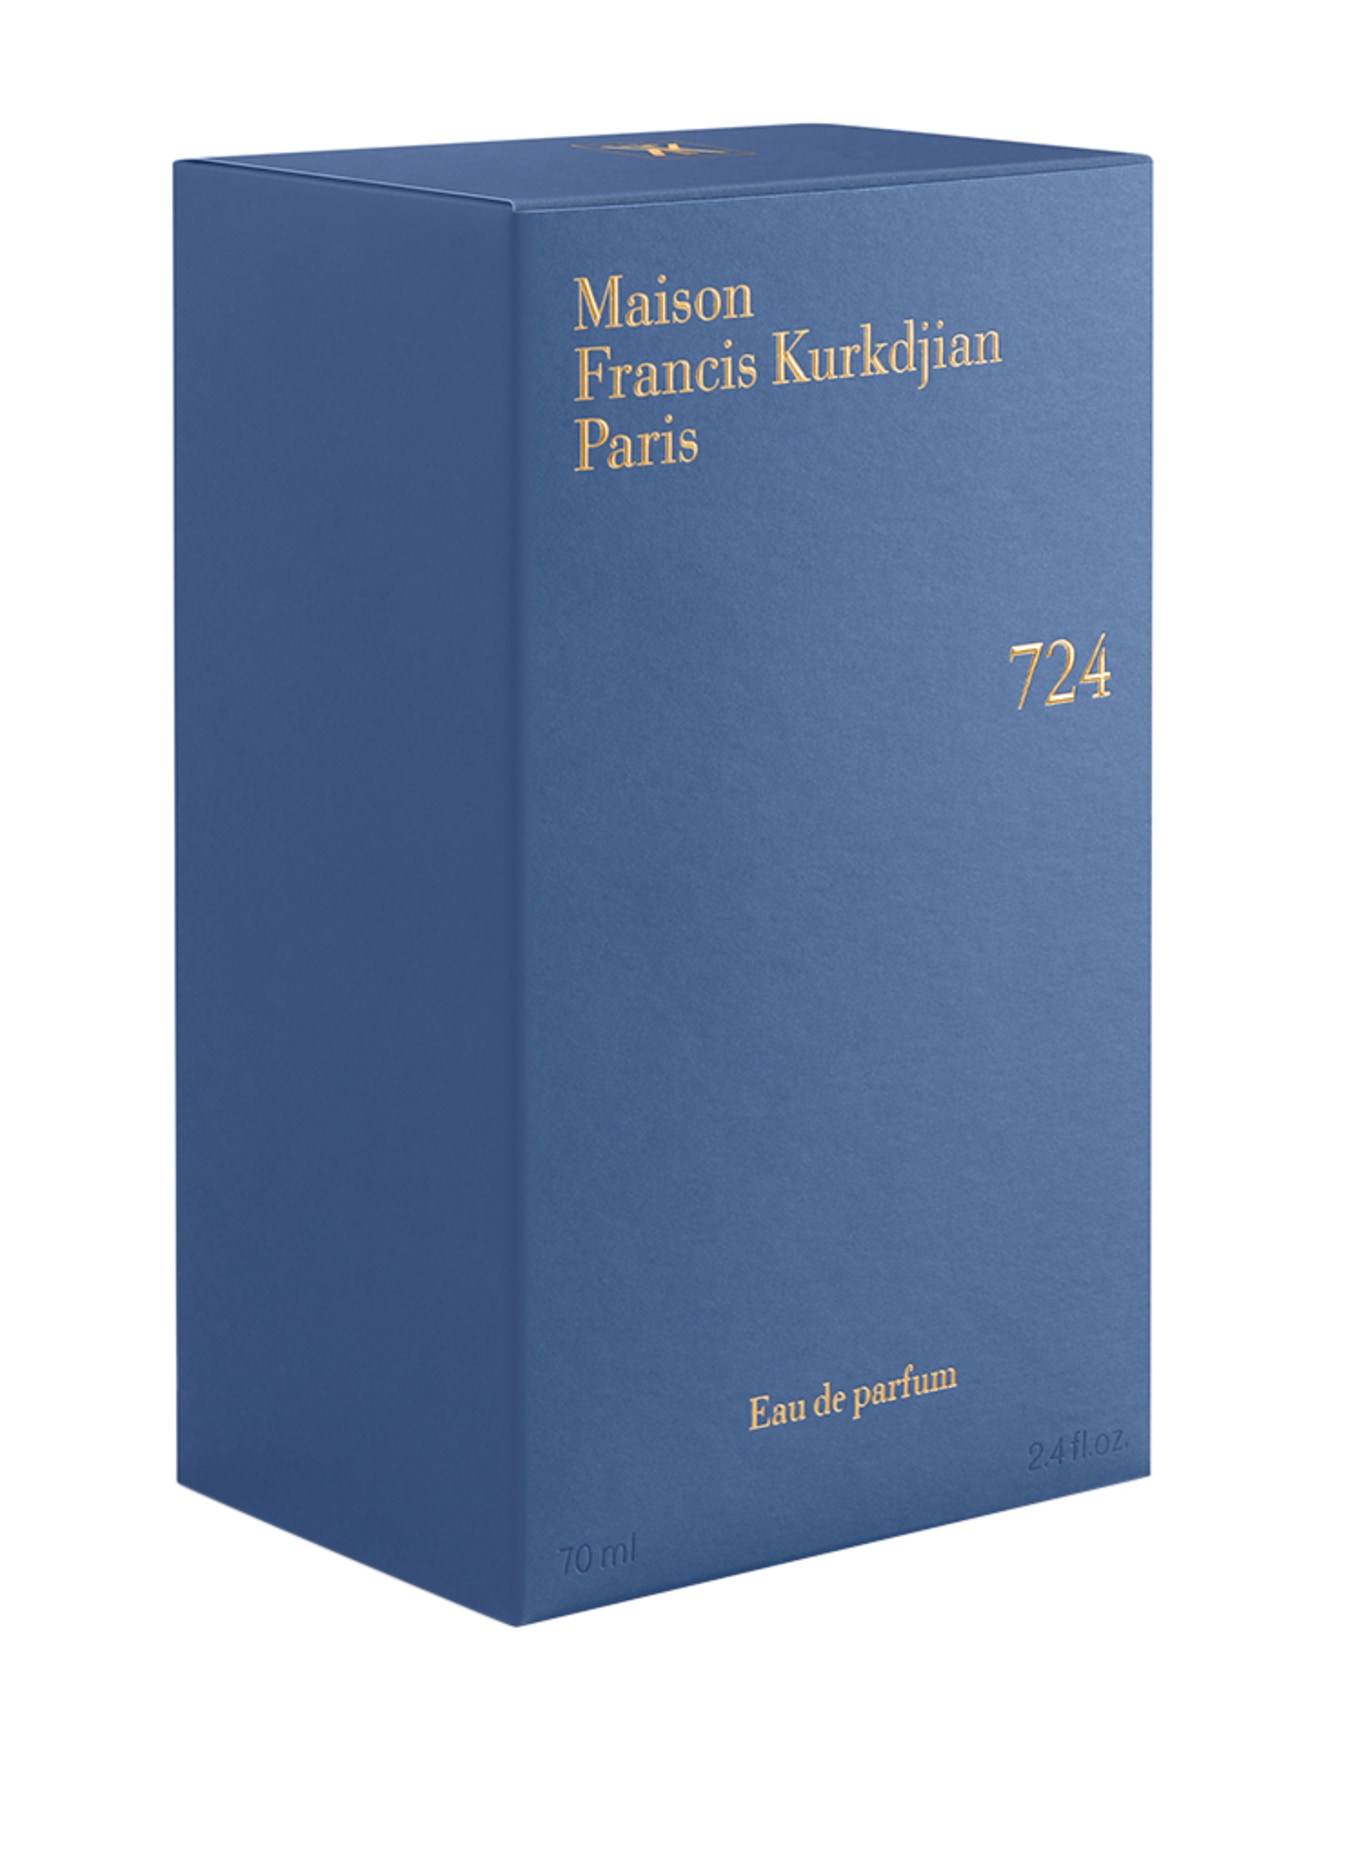 Maison Francis Kurkdjian Paris 724 (Bild 4)